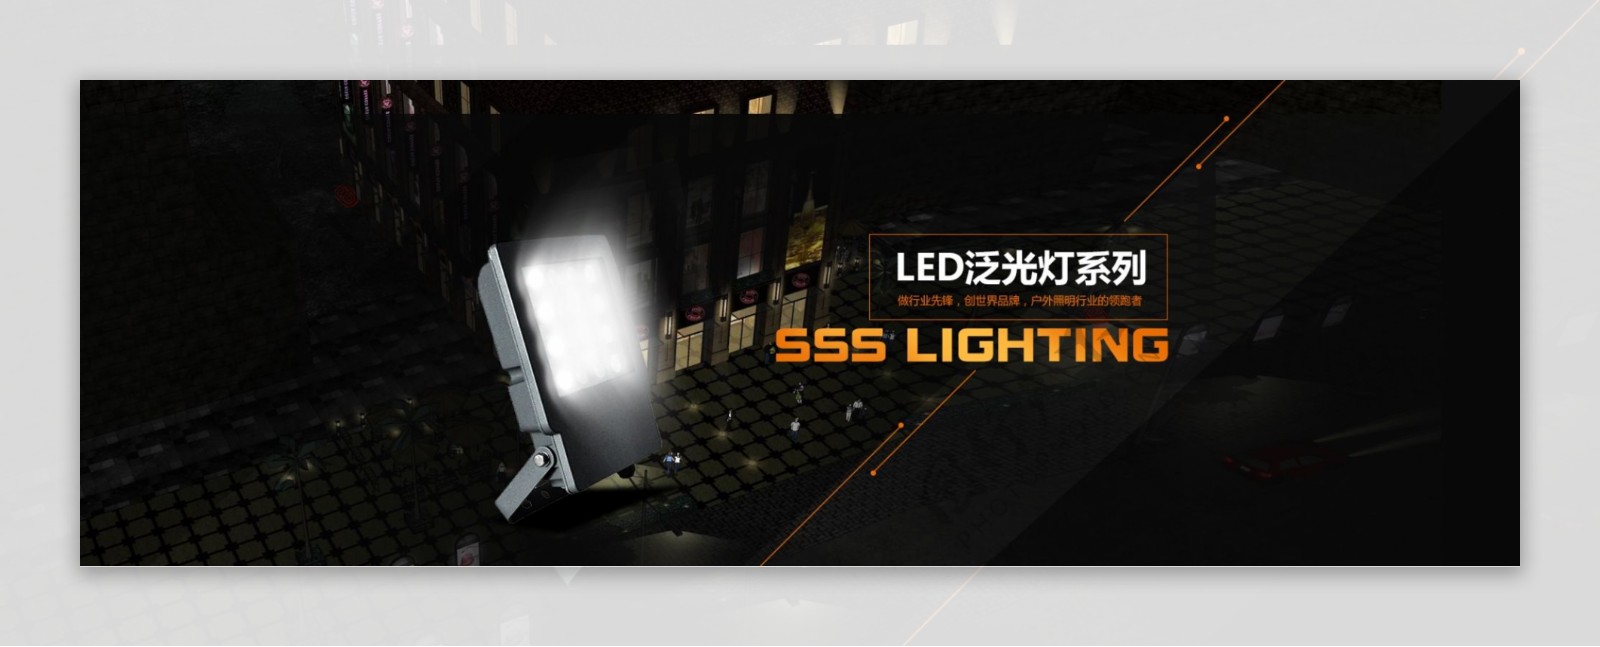 LED灯网站banner广告图